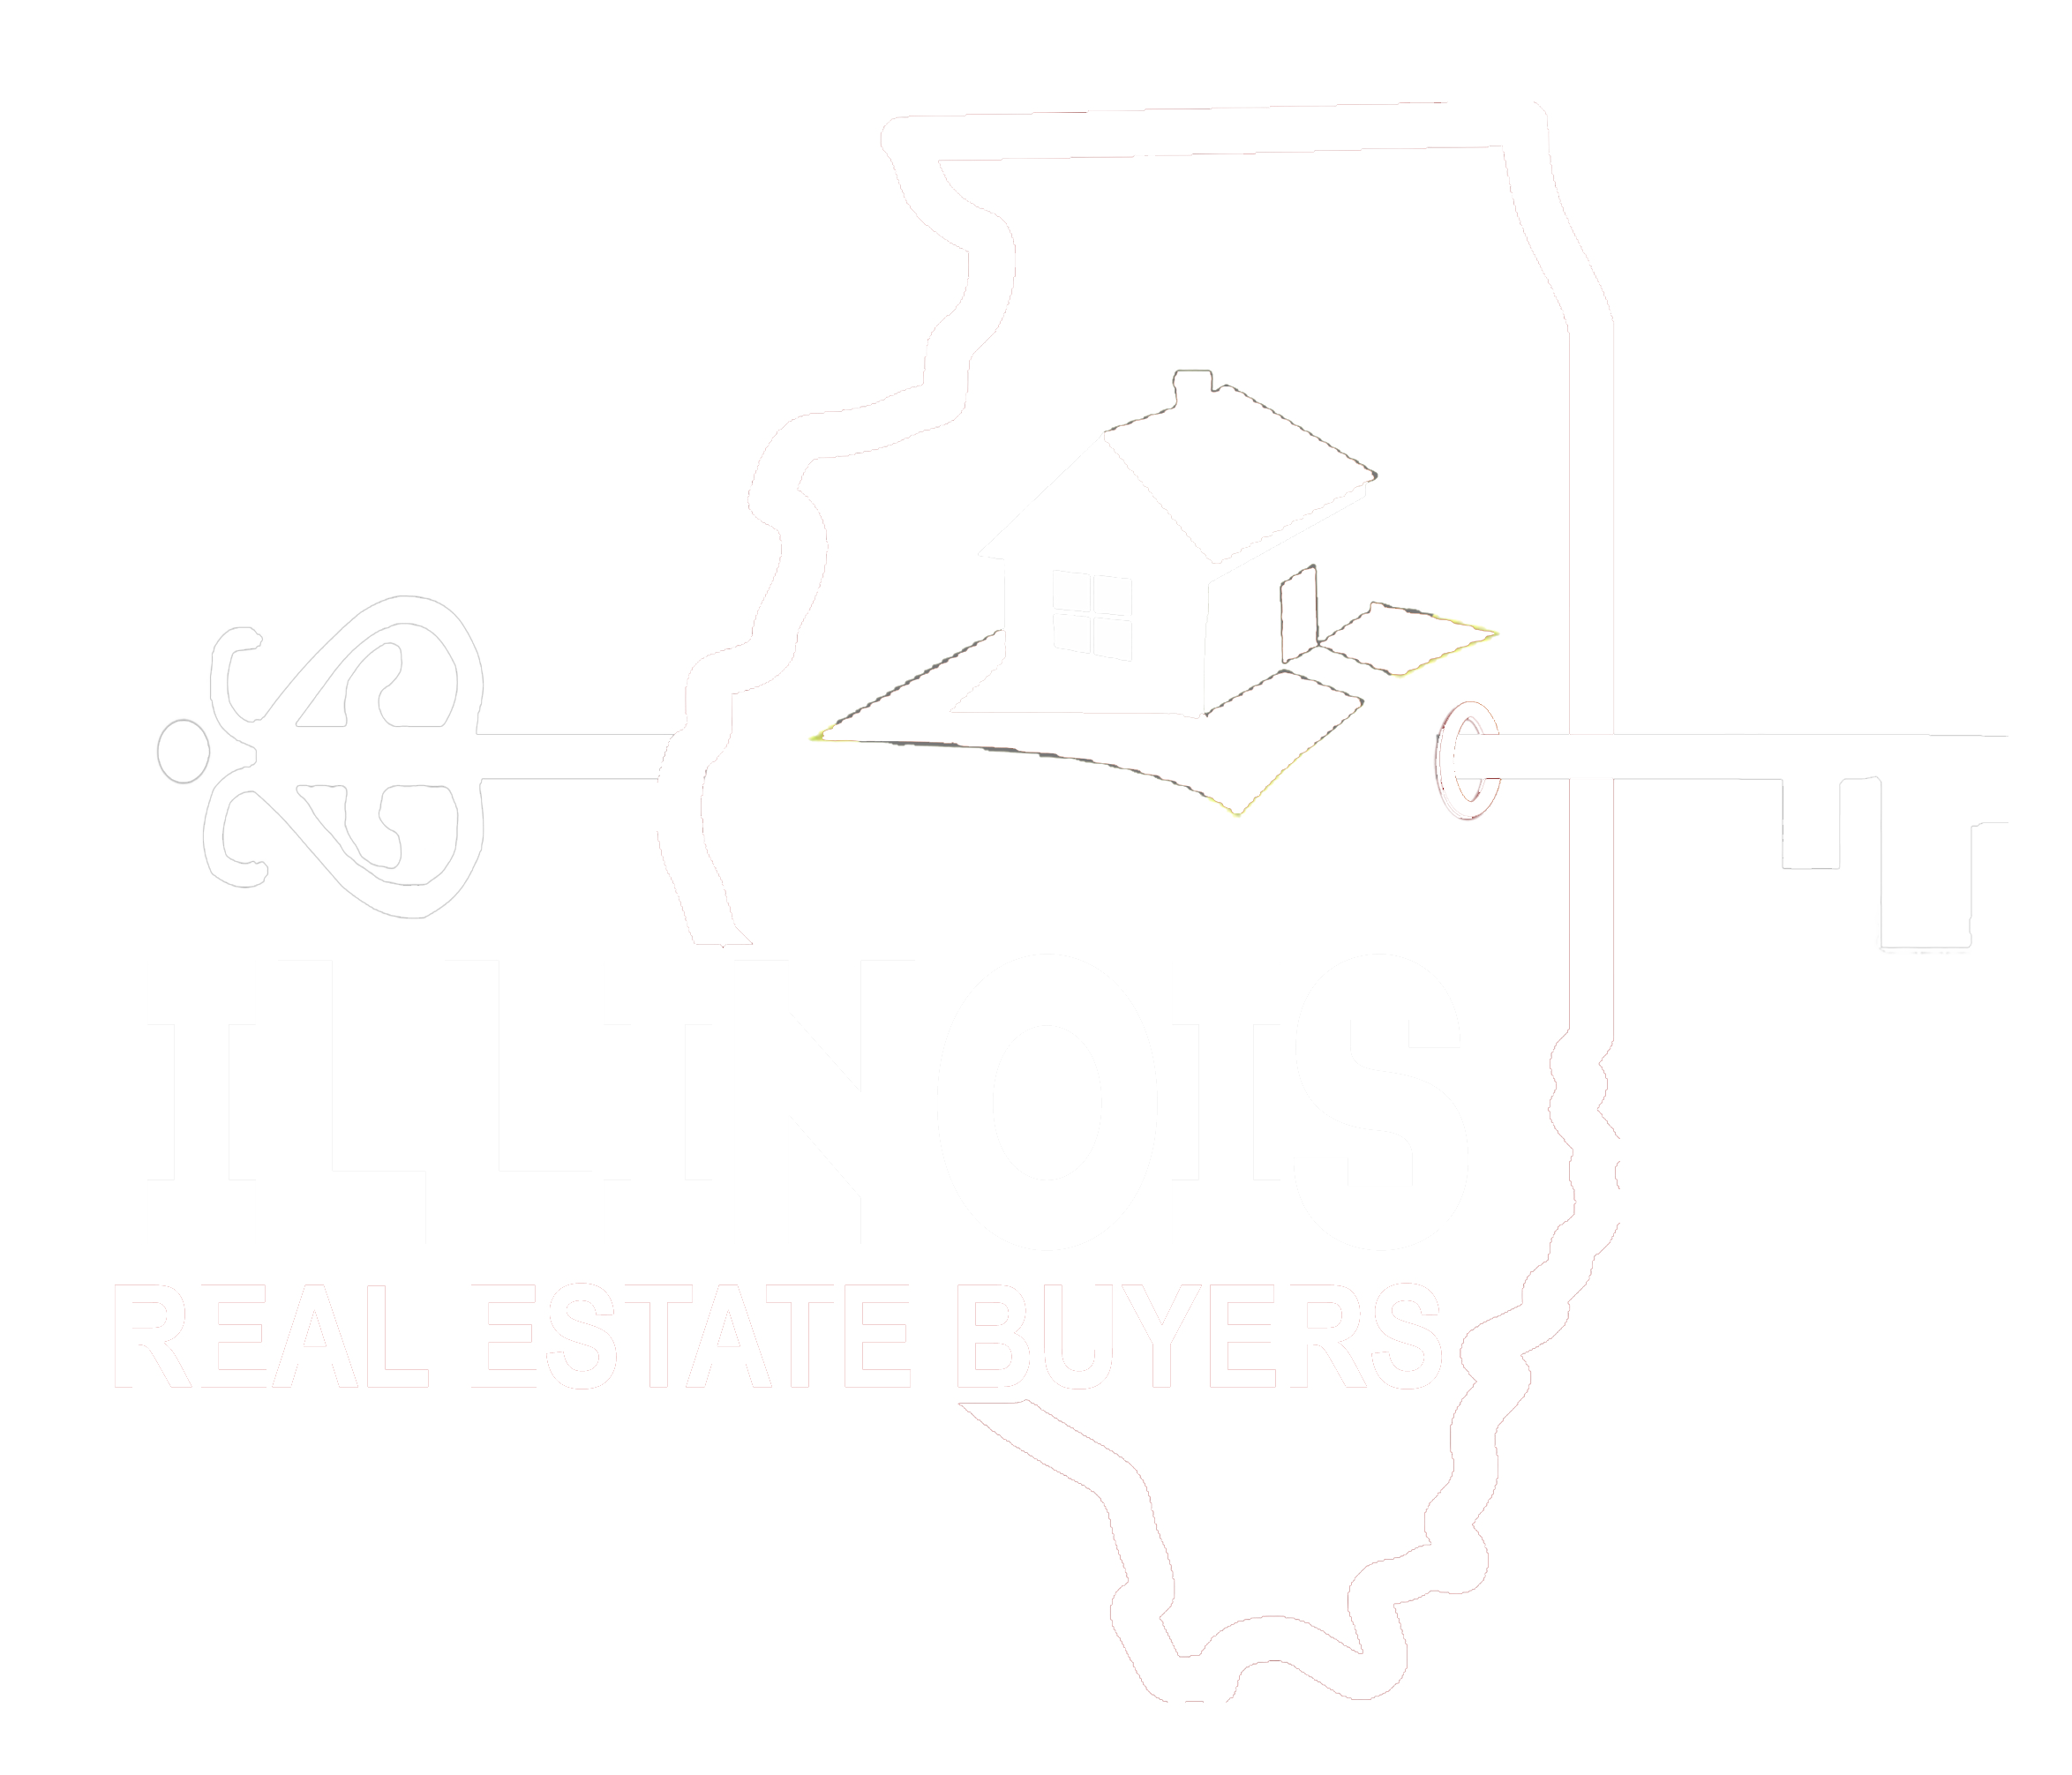 Illinois Real Estate Buyers logo